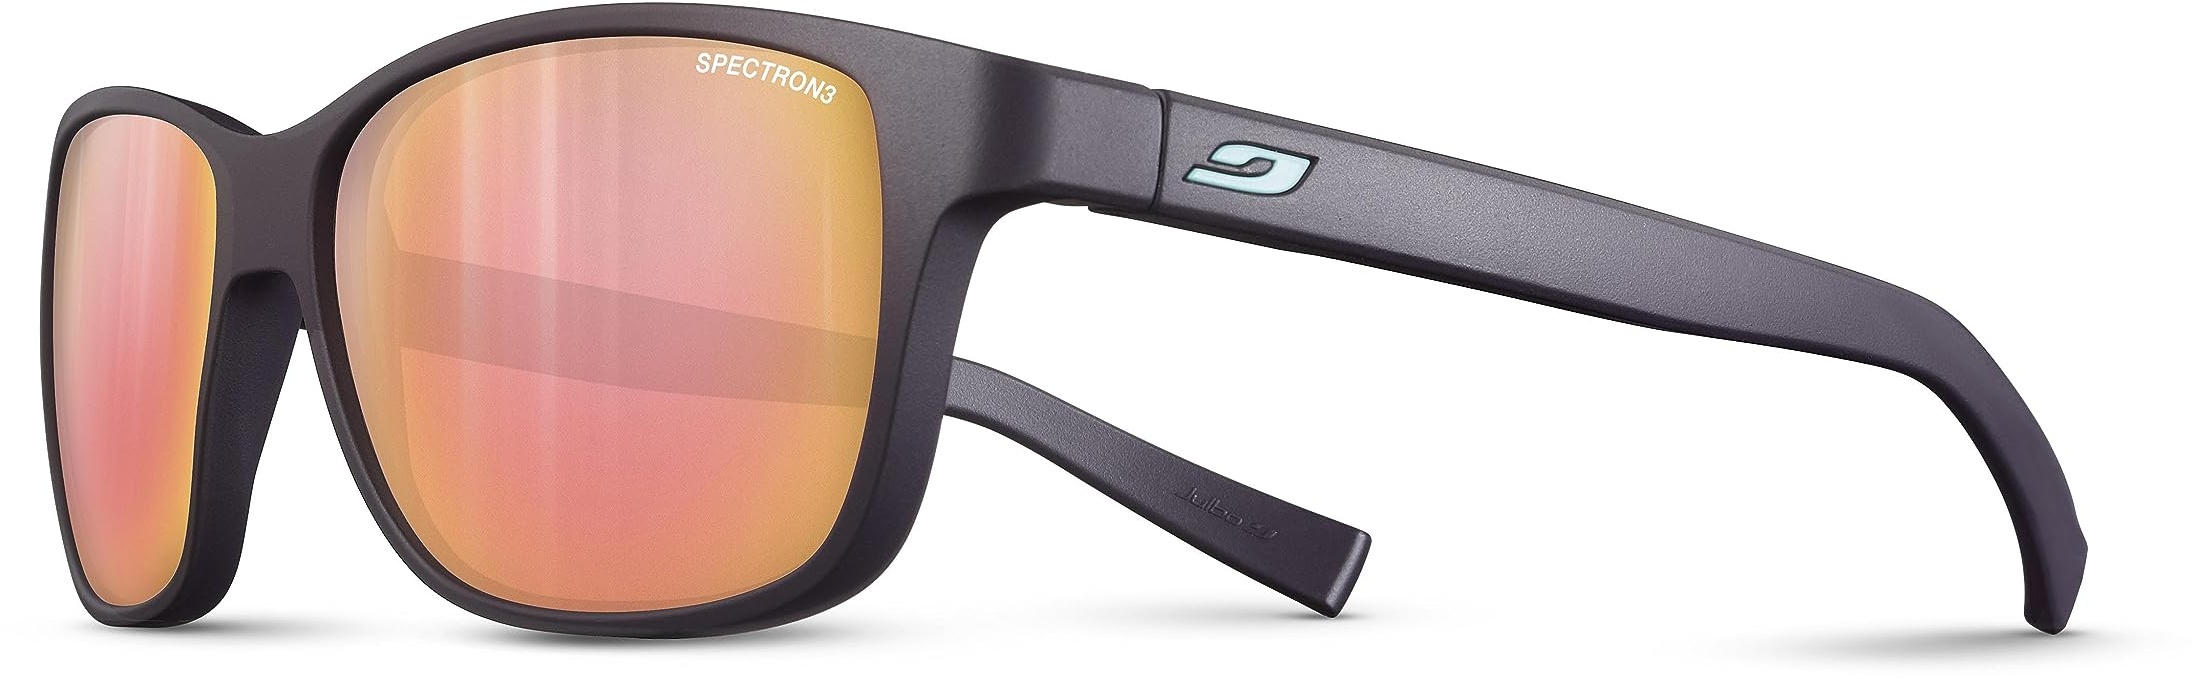 Julbo Powell Spectron 3 Sunglasses purple 2021 leisure sunglasses